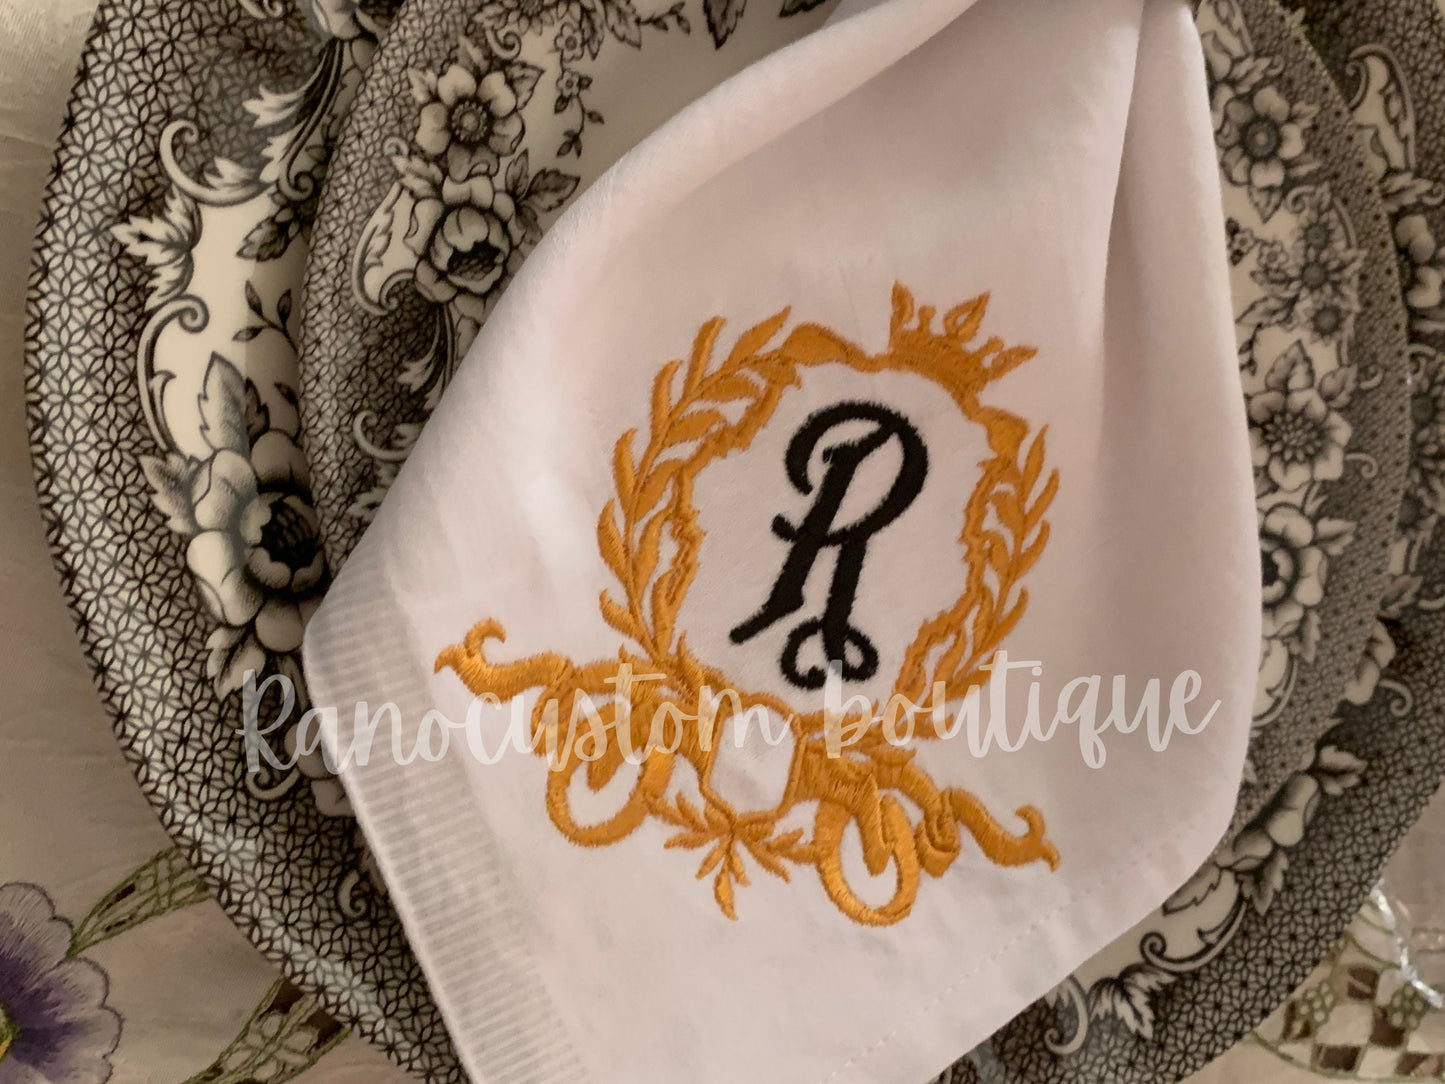 Elegant Bespoke Embroidered Napkin, Custom Cotton Embroidered Napkin, Personalised Luxury Napkin